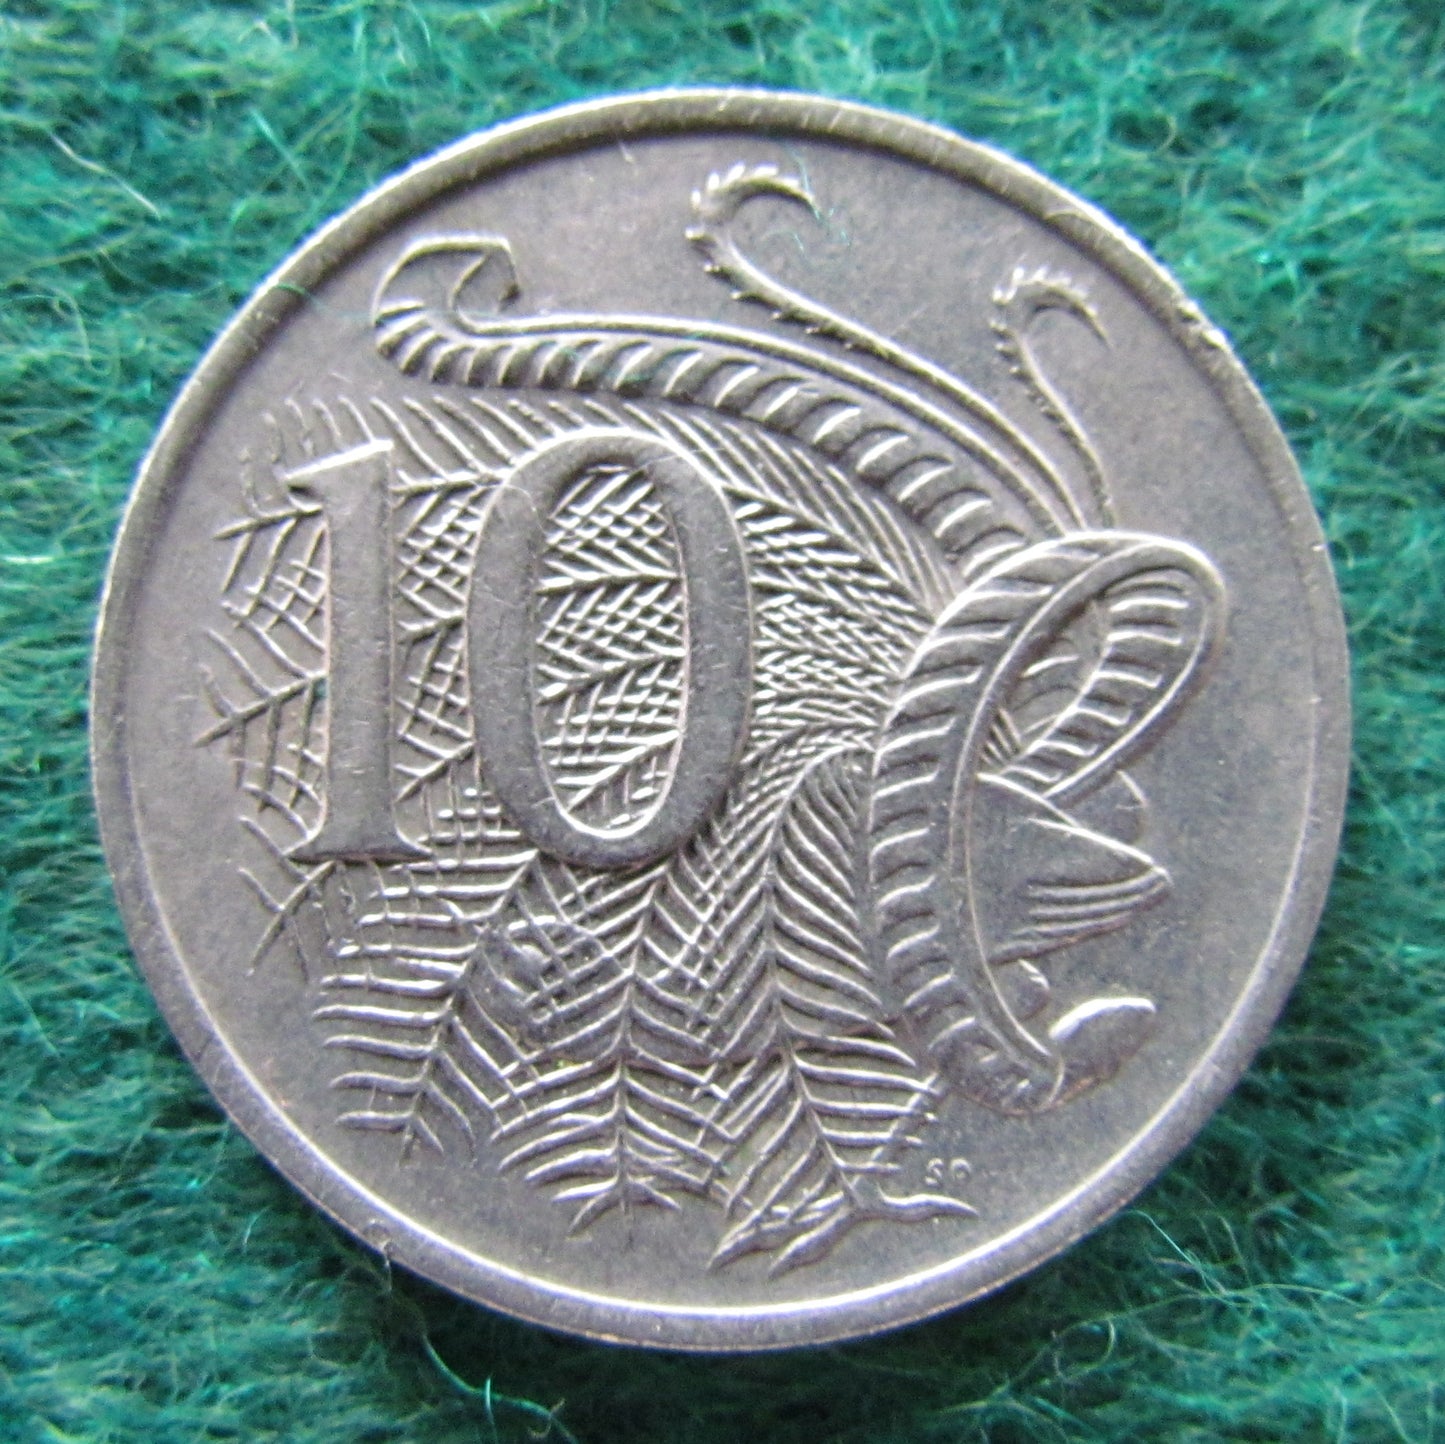 Australian 1971 10 Cent Queen Elizabeth II Coin - Circulated